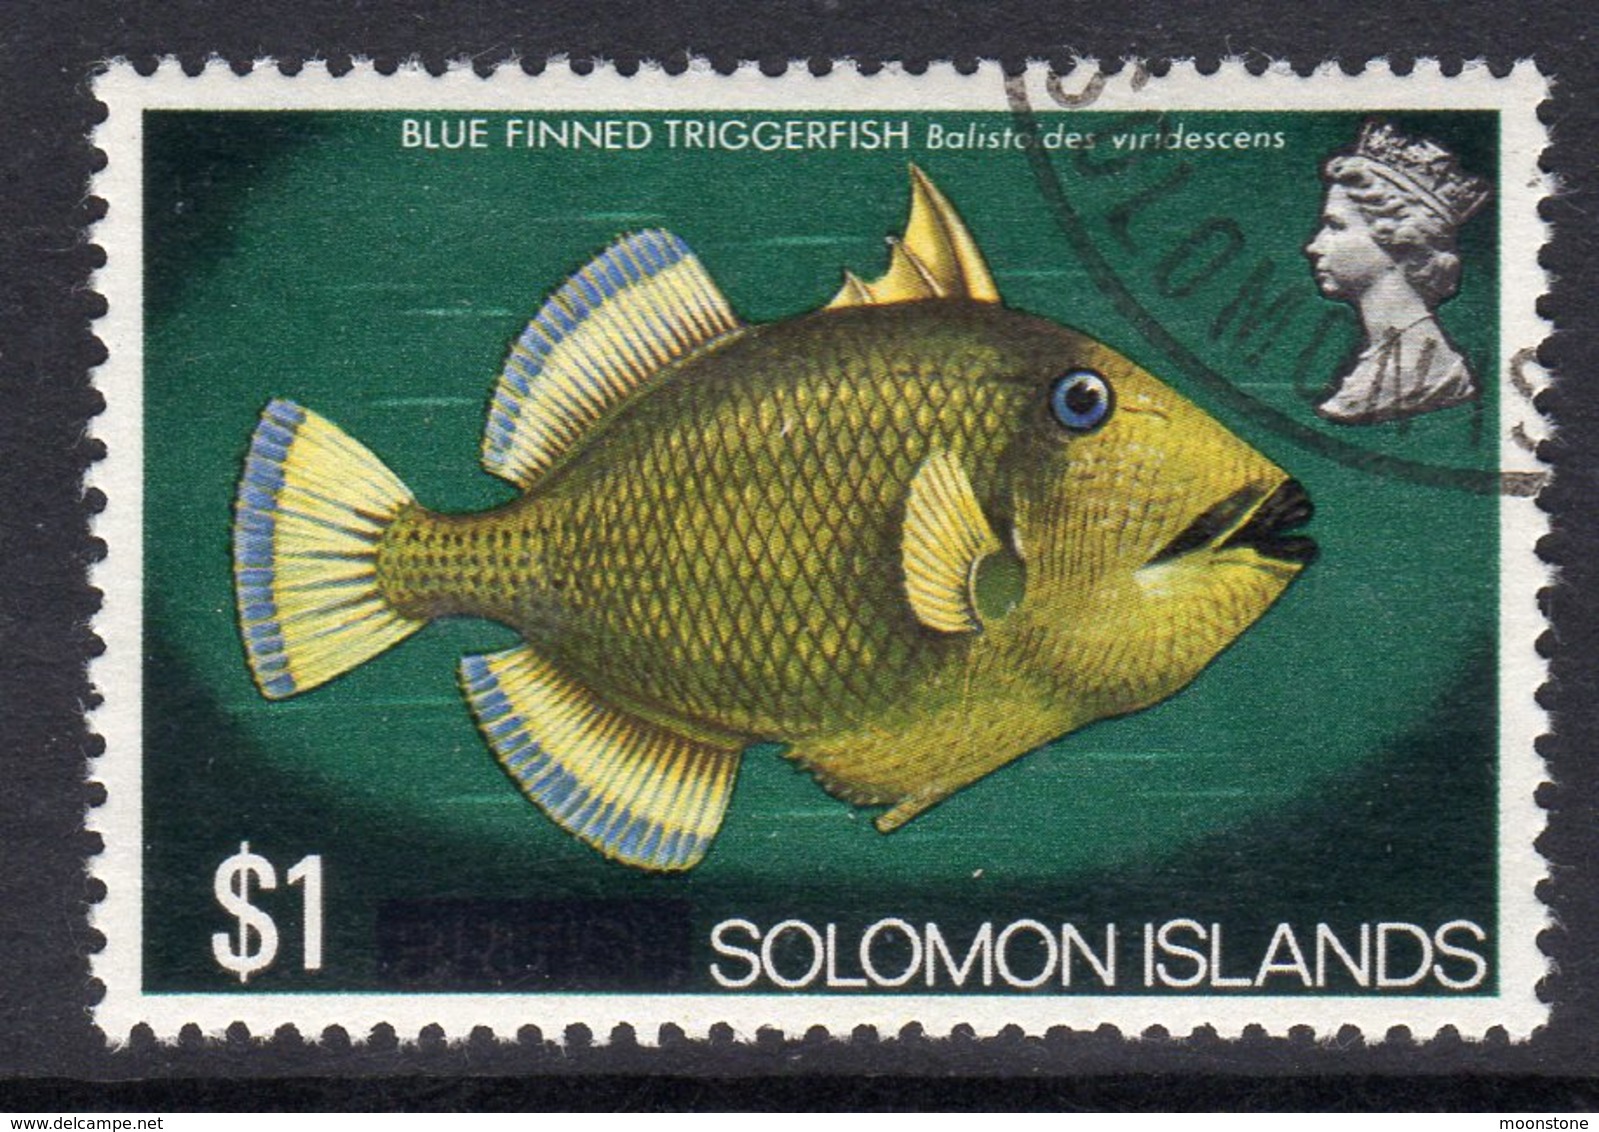 Solomon Islands 1975 Definitives $1 Value, Bar Obliterating 'British' White Paper Variety, Used, SG 298a (B) - Salomonseilanden (...-1978)